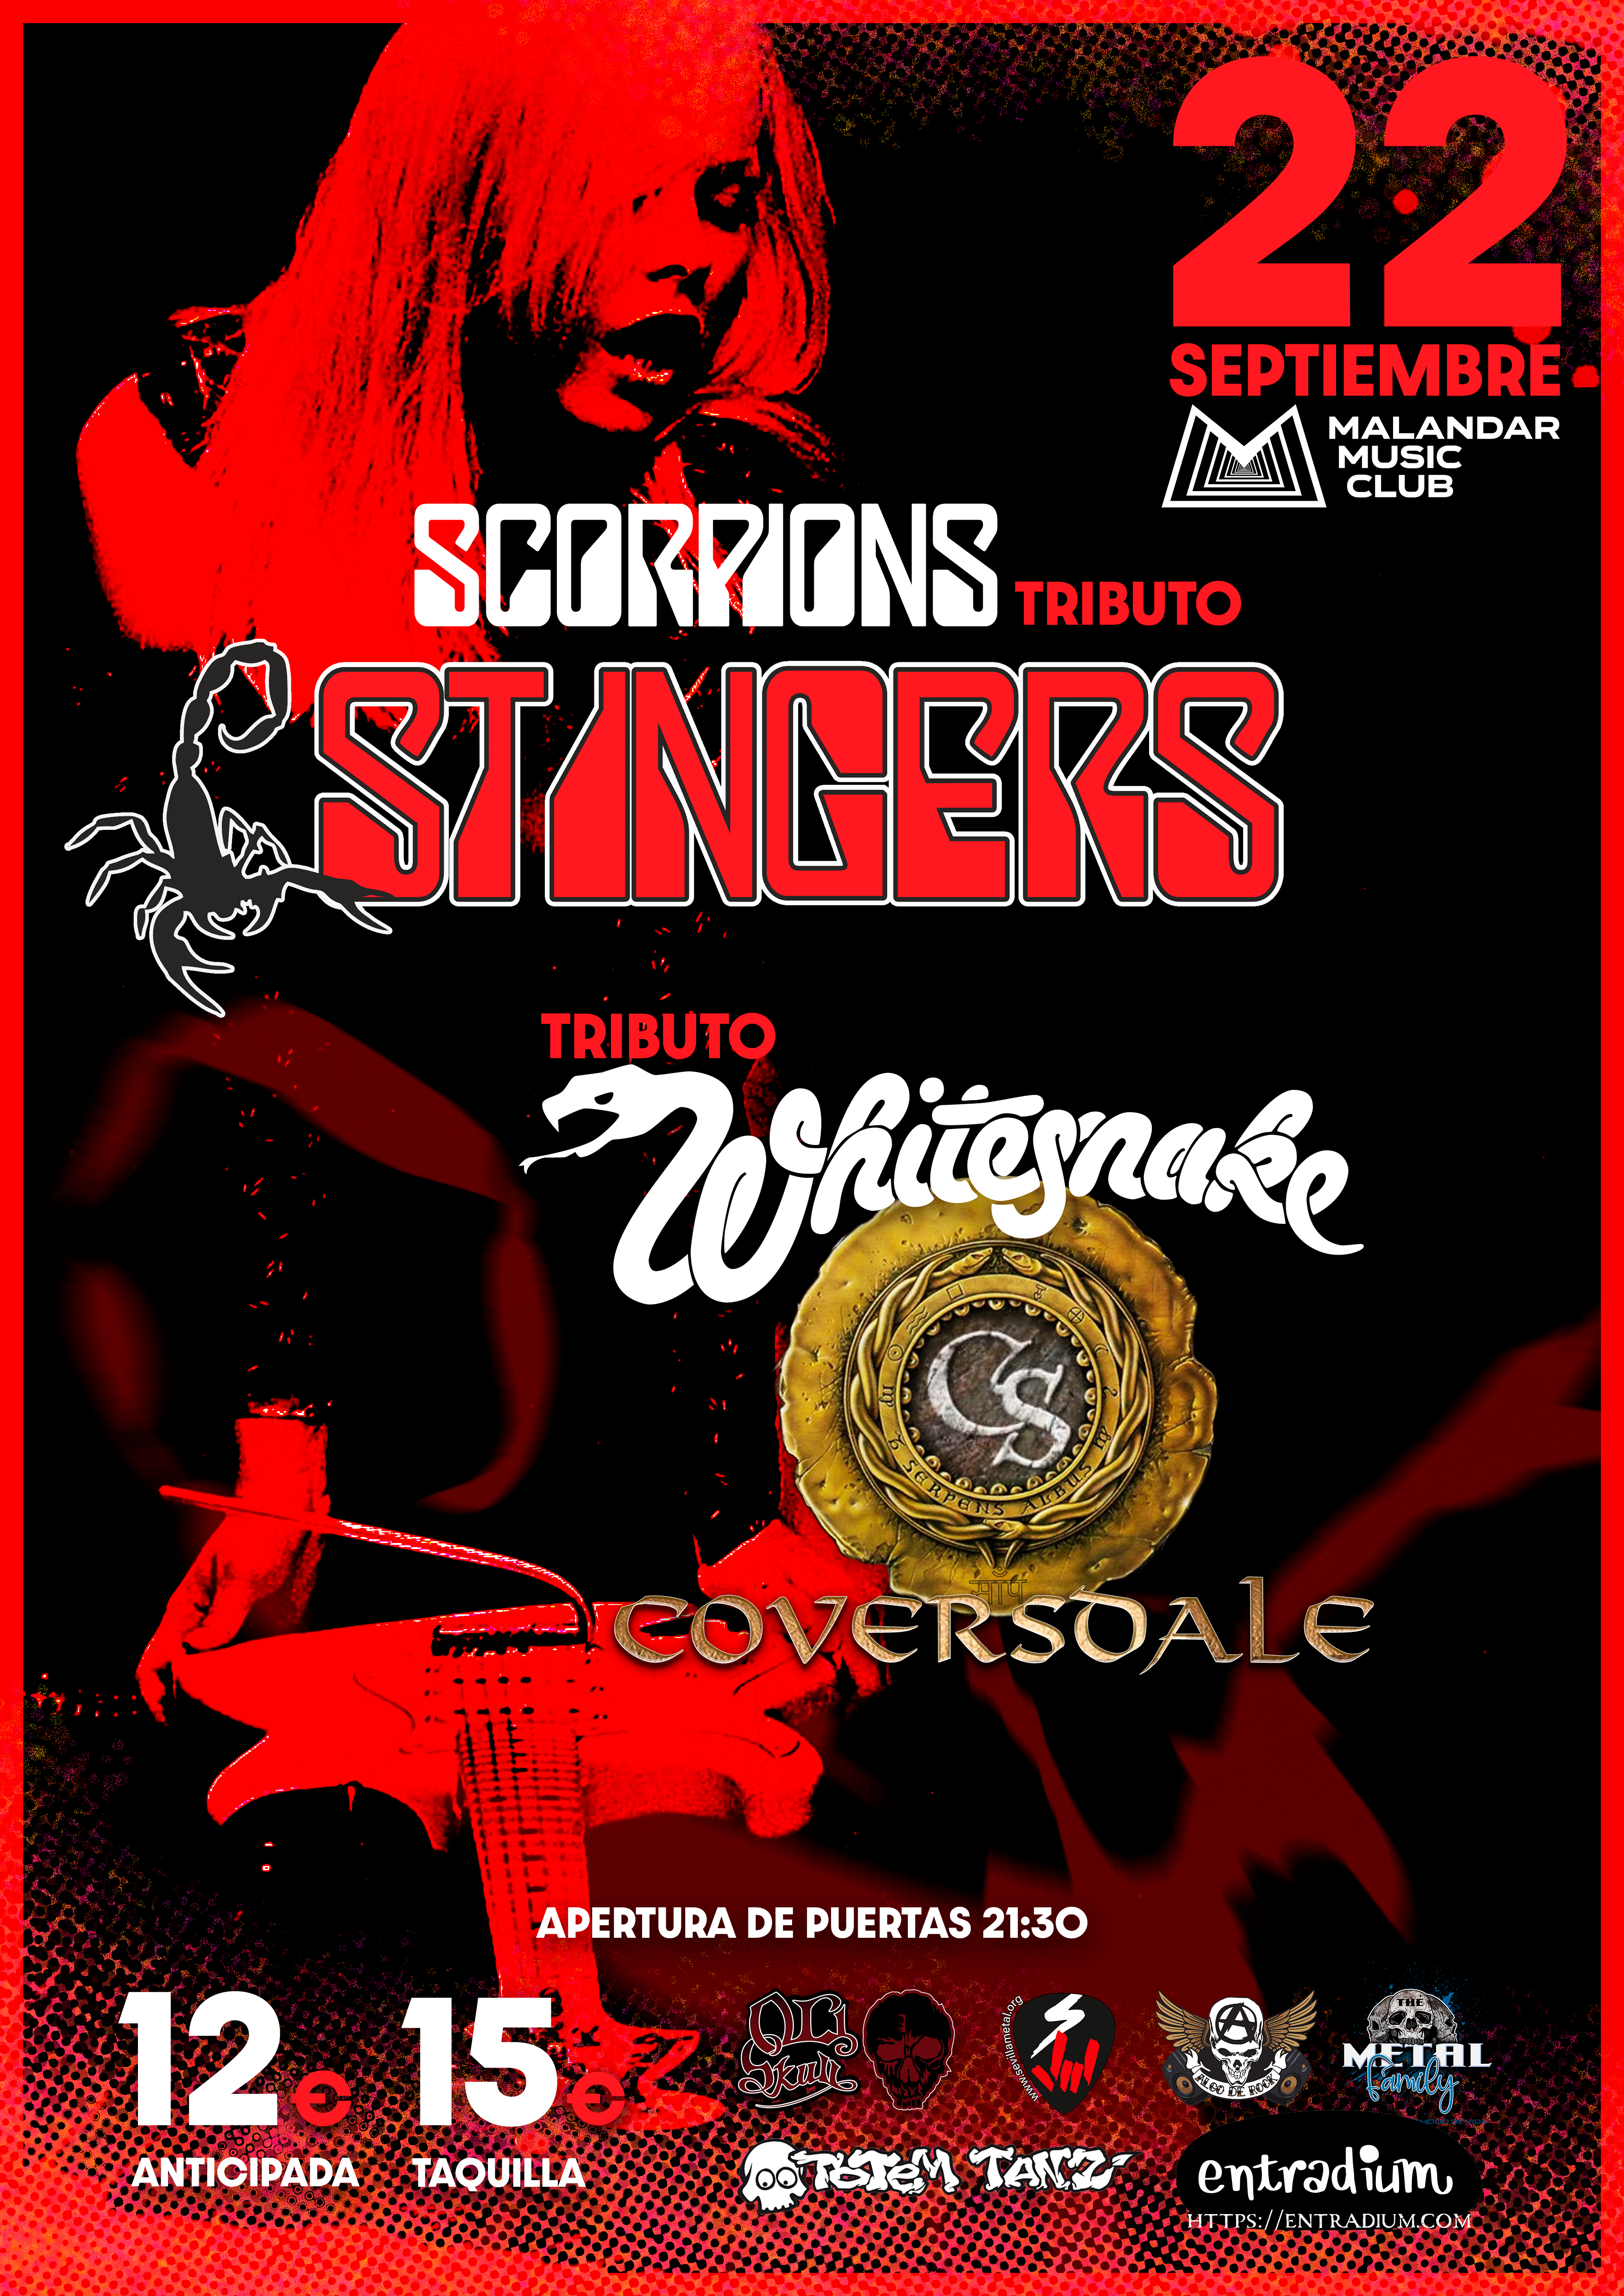 Stingers (Tributo a Scorpions) y Coversdale (Tributo a Whitesnake) el 22 de septiembre en Sevilla